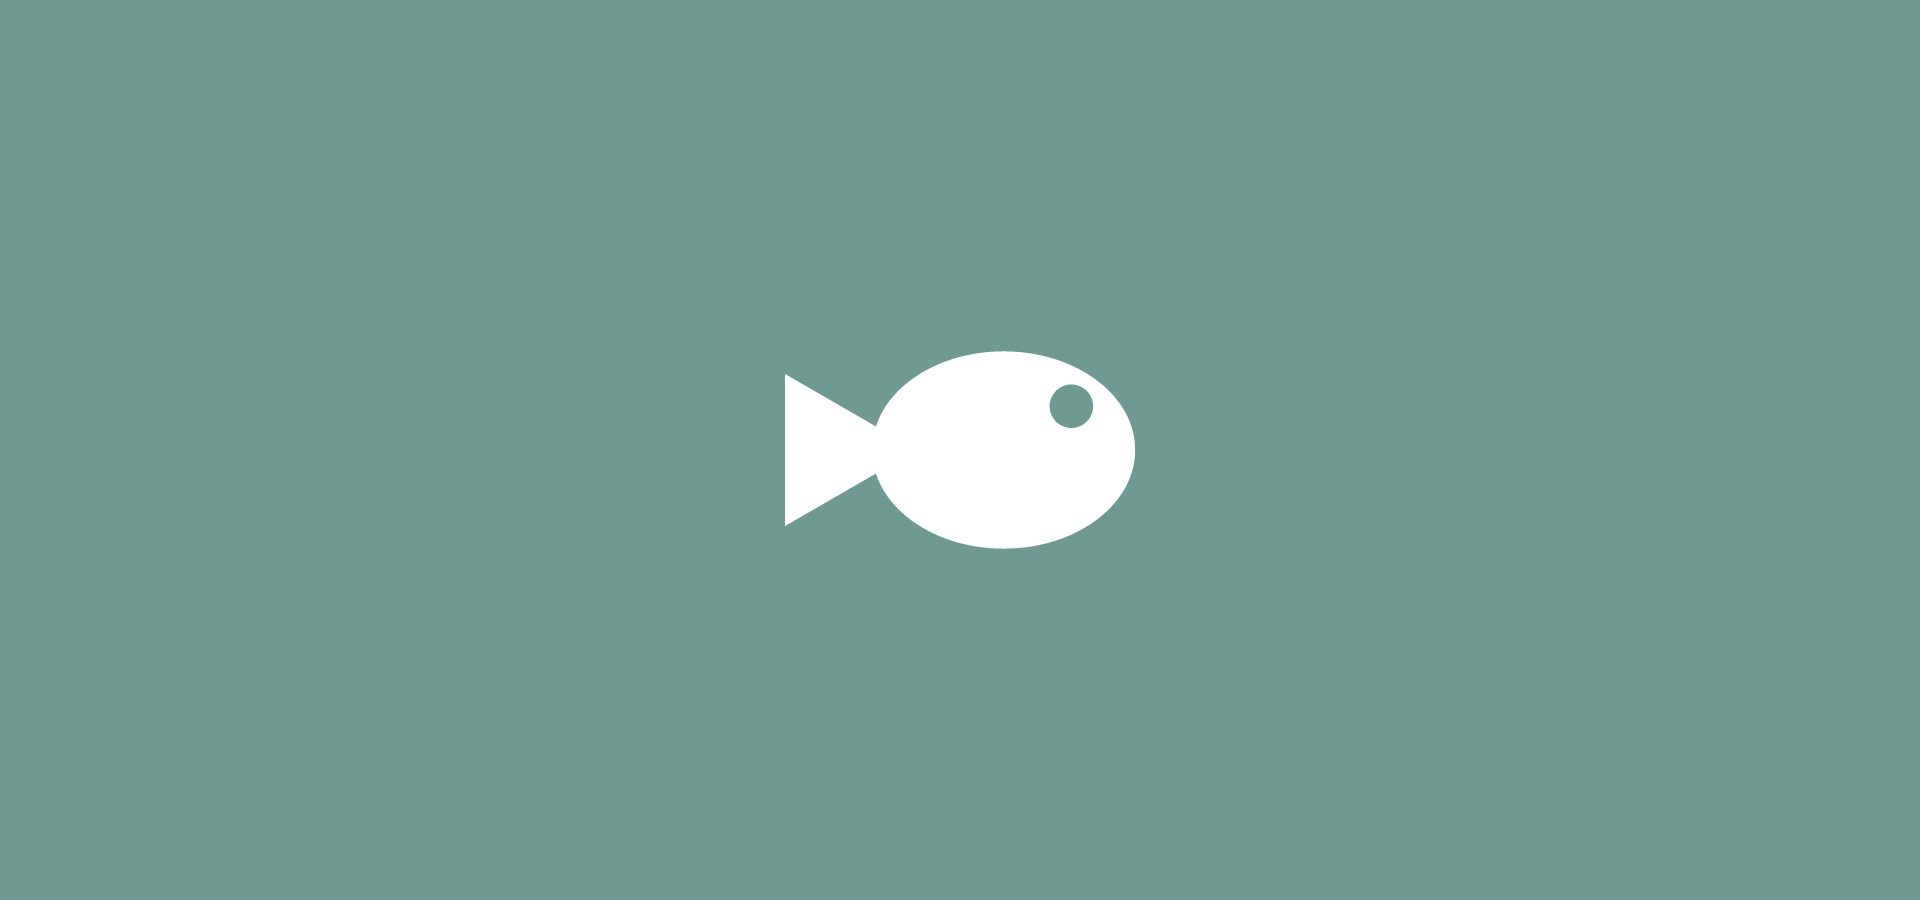 Fishmas icon on dark background